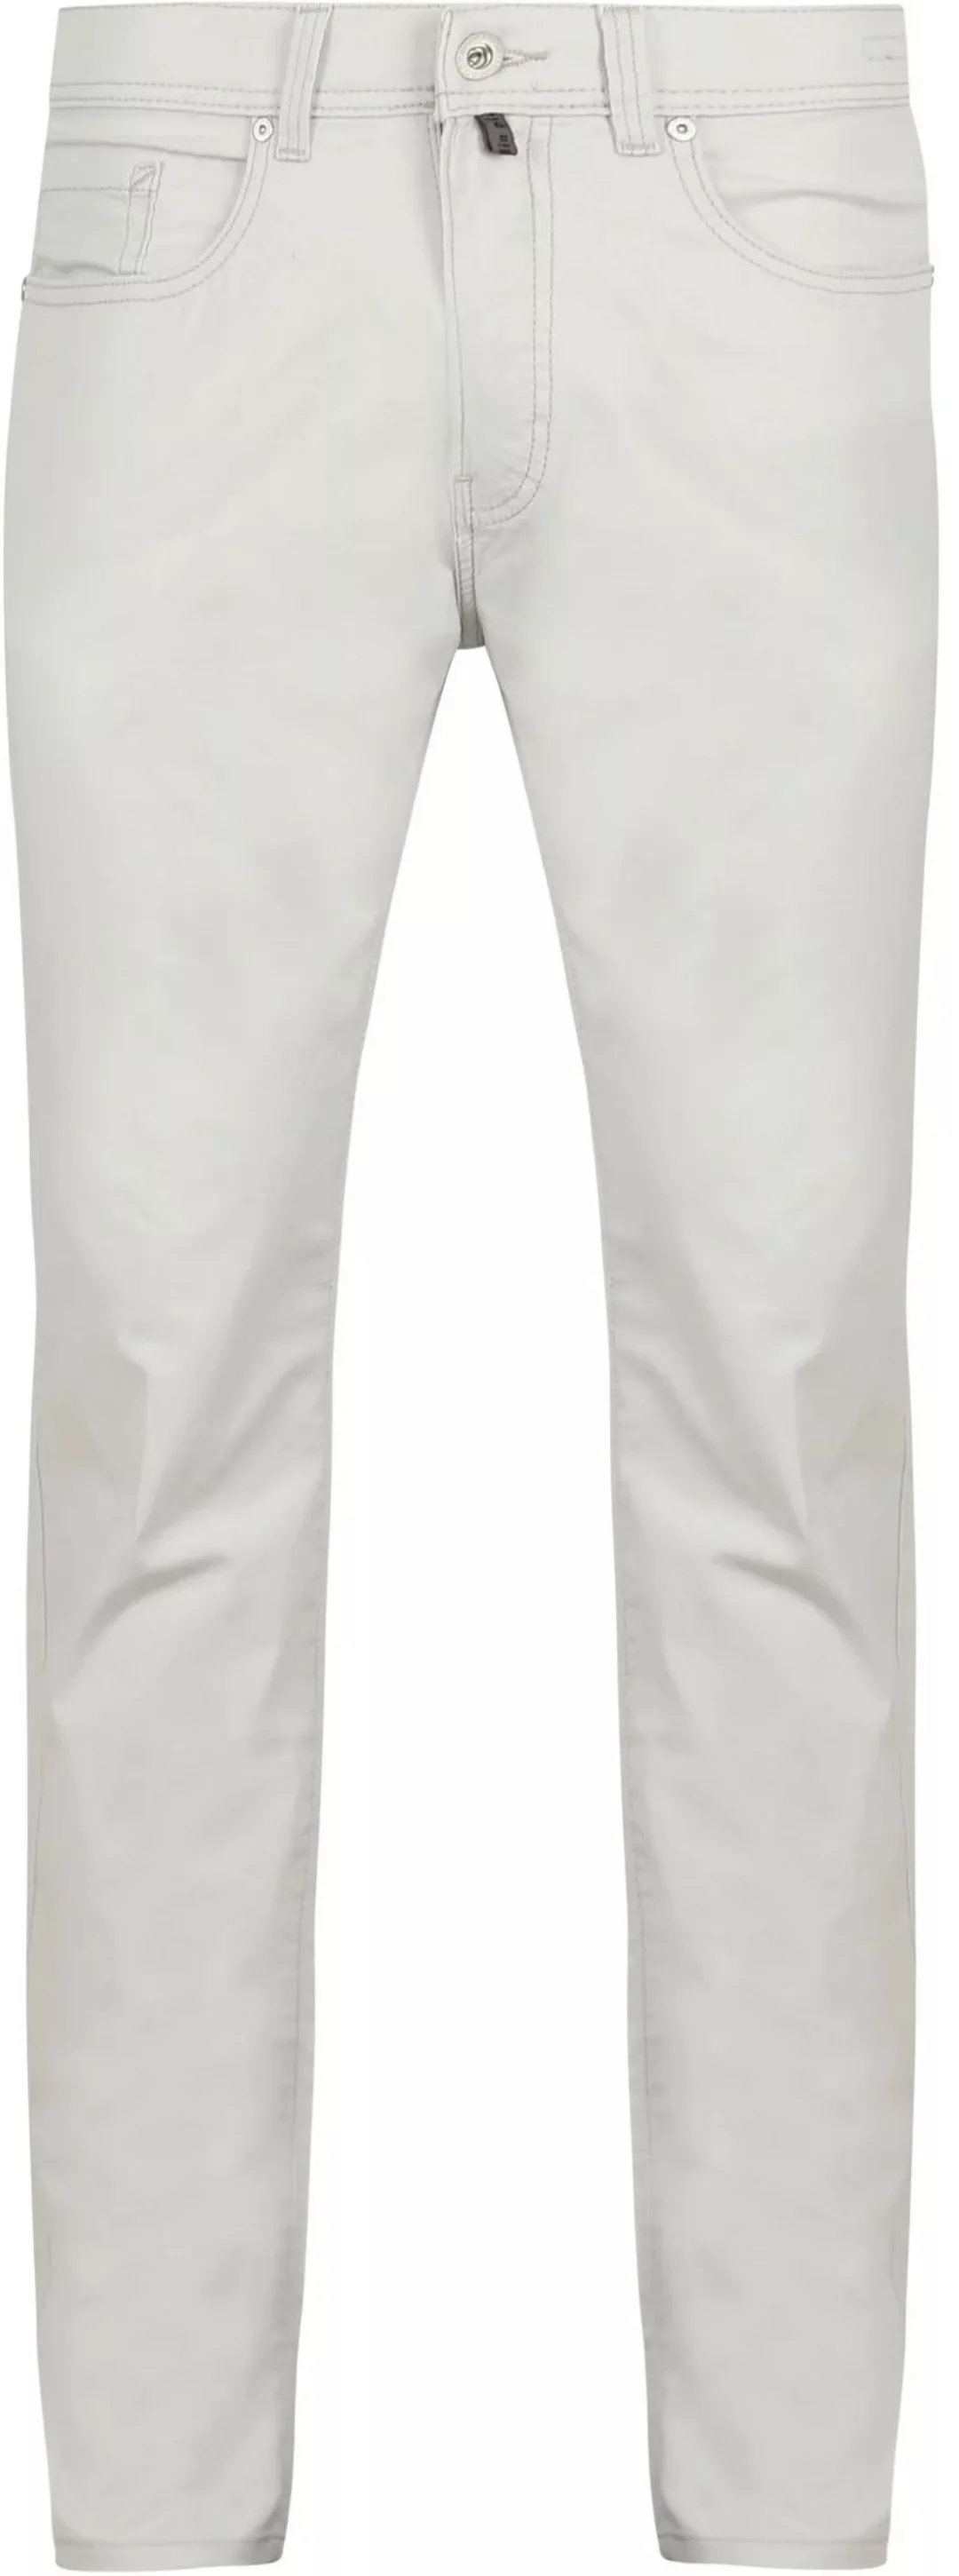 Pierre Cardin Trousers Lyon Tapered Hellgrau - Größe W 32 - L 34 günstig online kaufen